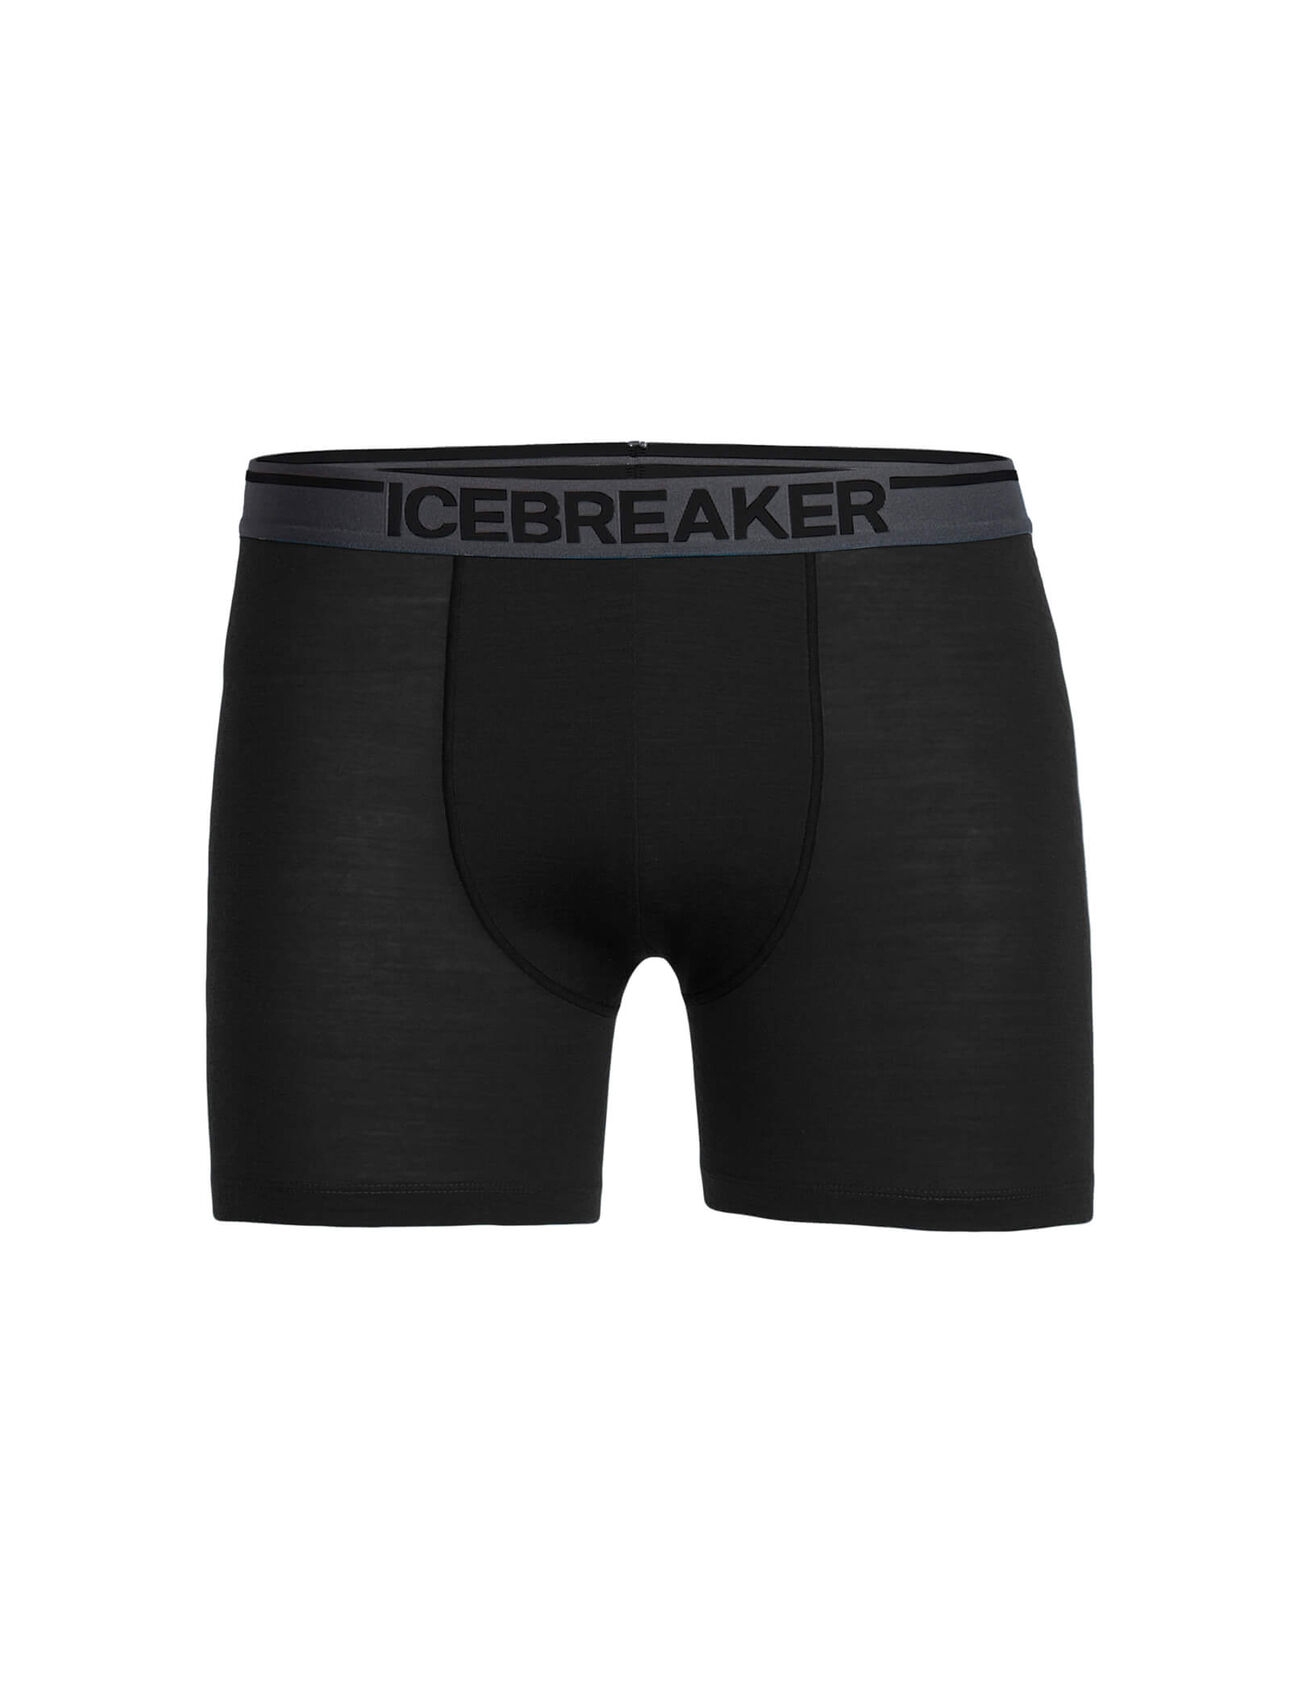 Icebreaker Mens Anatomica Boxers, Black-0